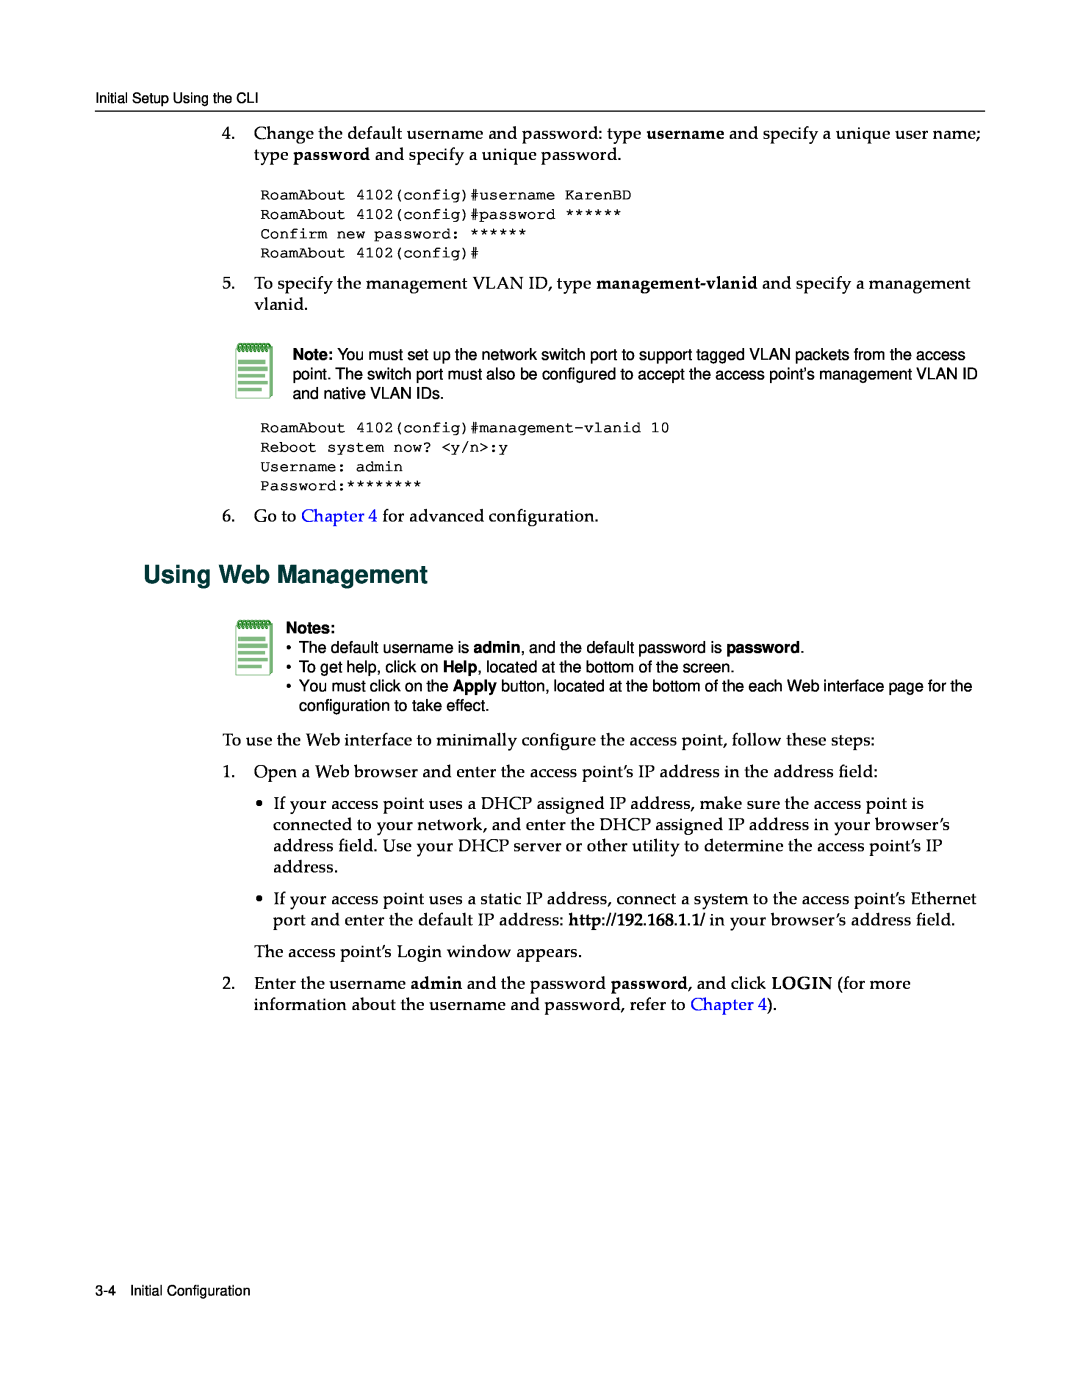 Enterasys Networks RBT-4102 manual Using Web Management 